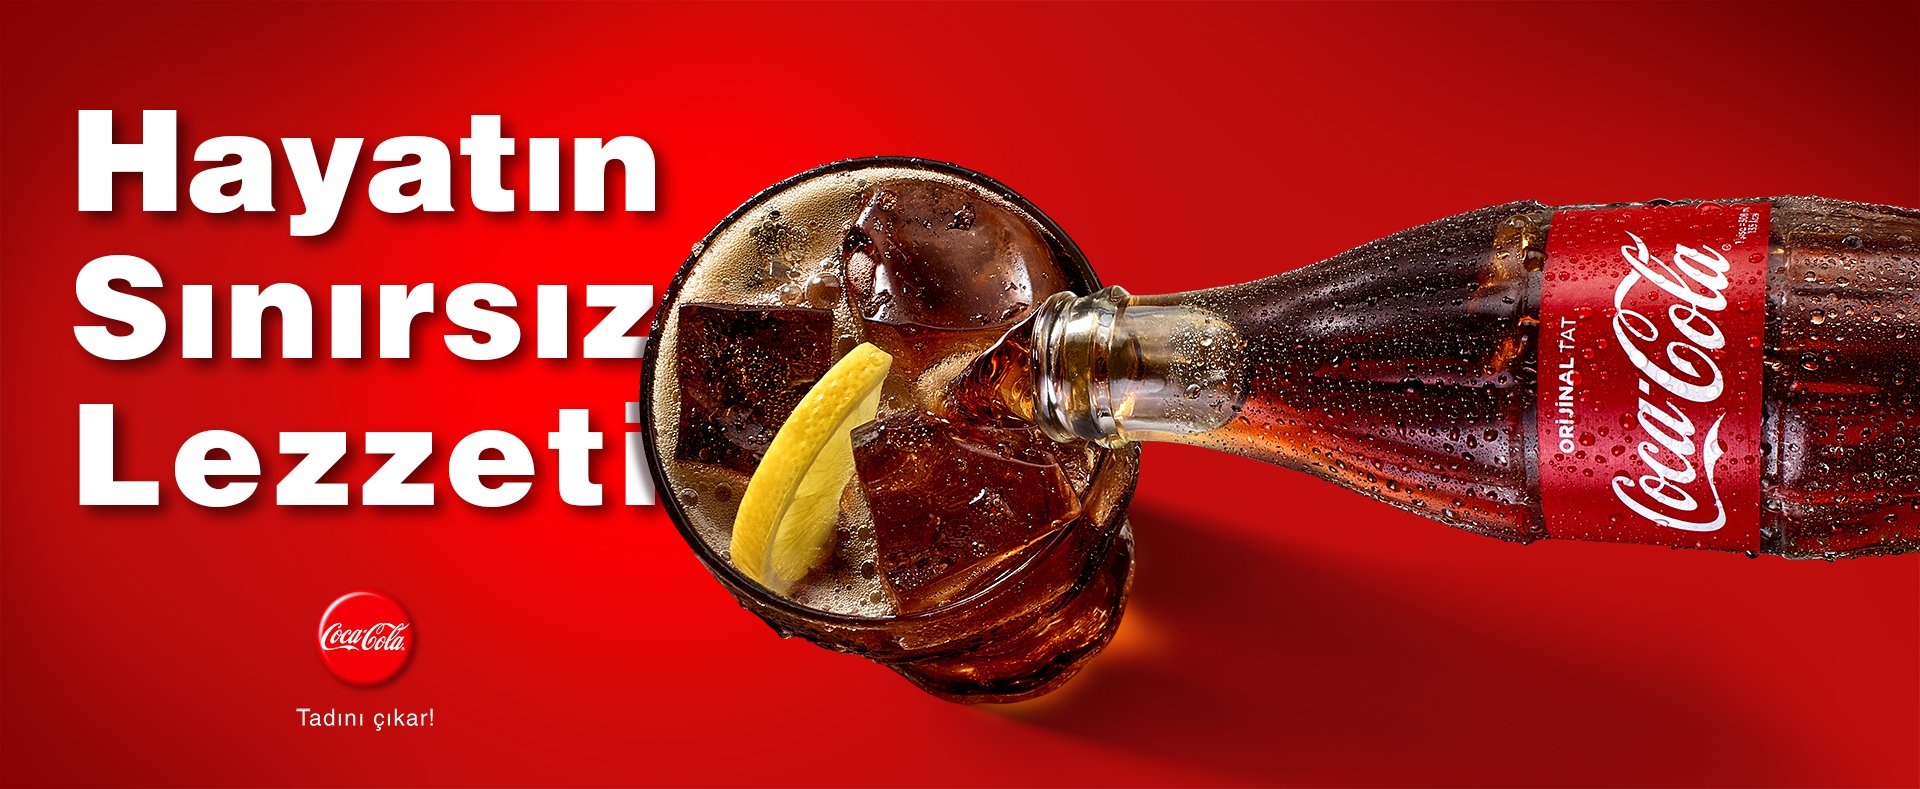 Coca-Cola_1.jpg